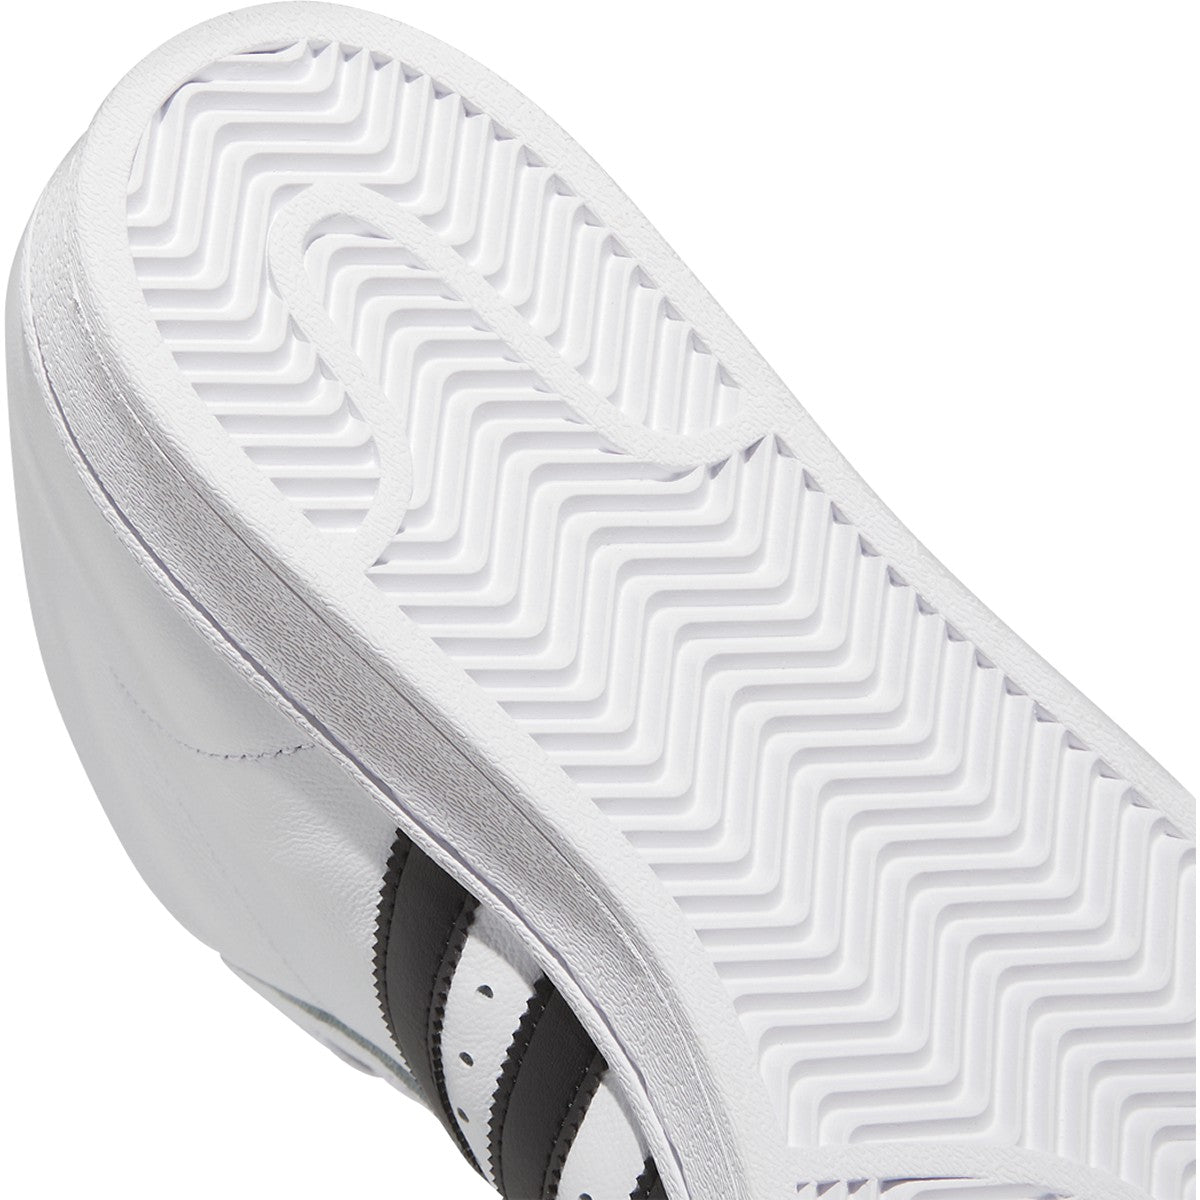 White Pro Model ADV Adidas Skateboarding Shoe Detail